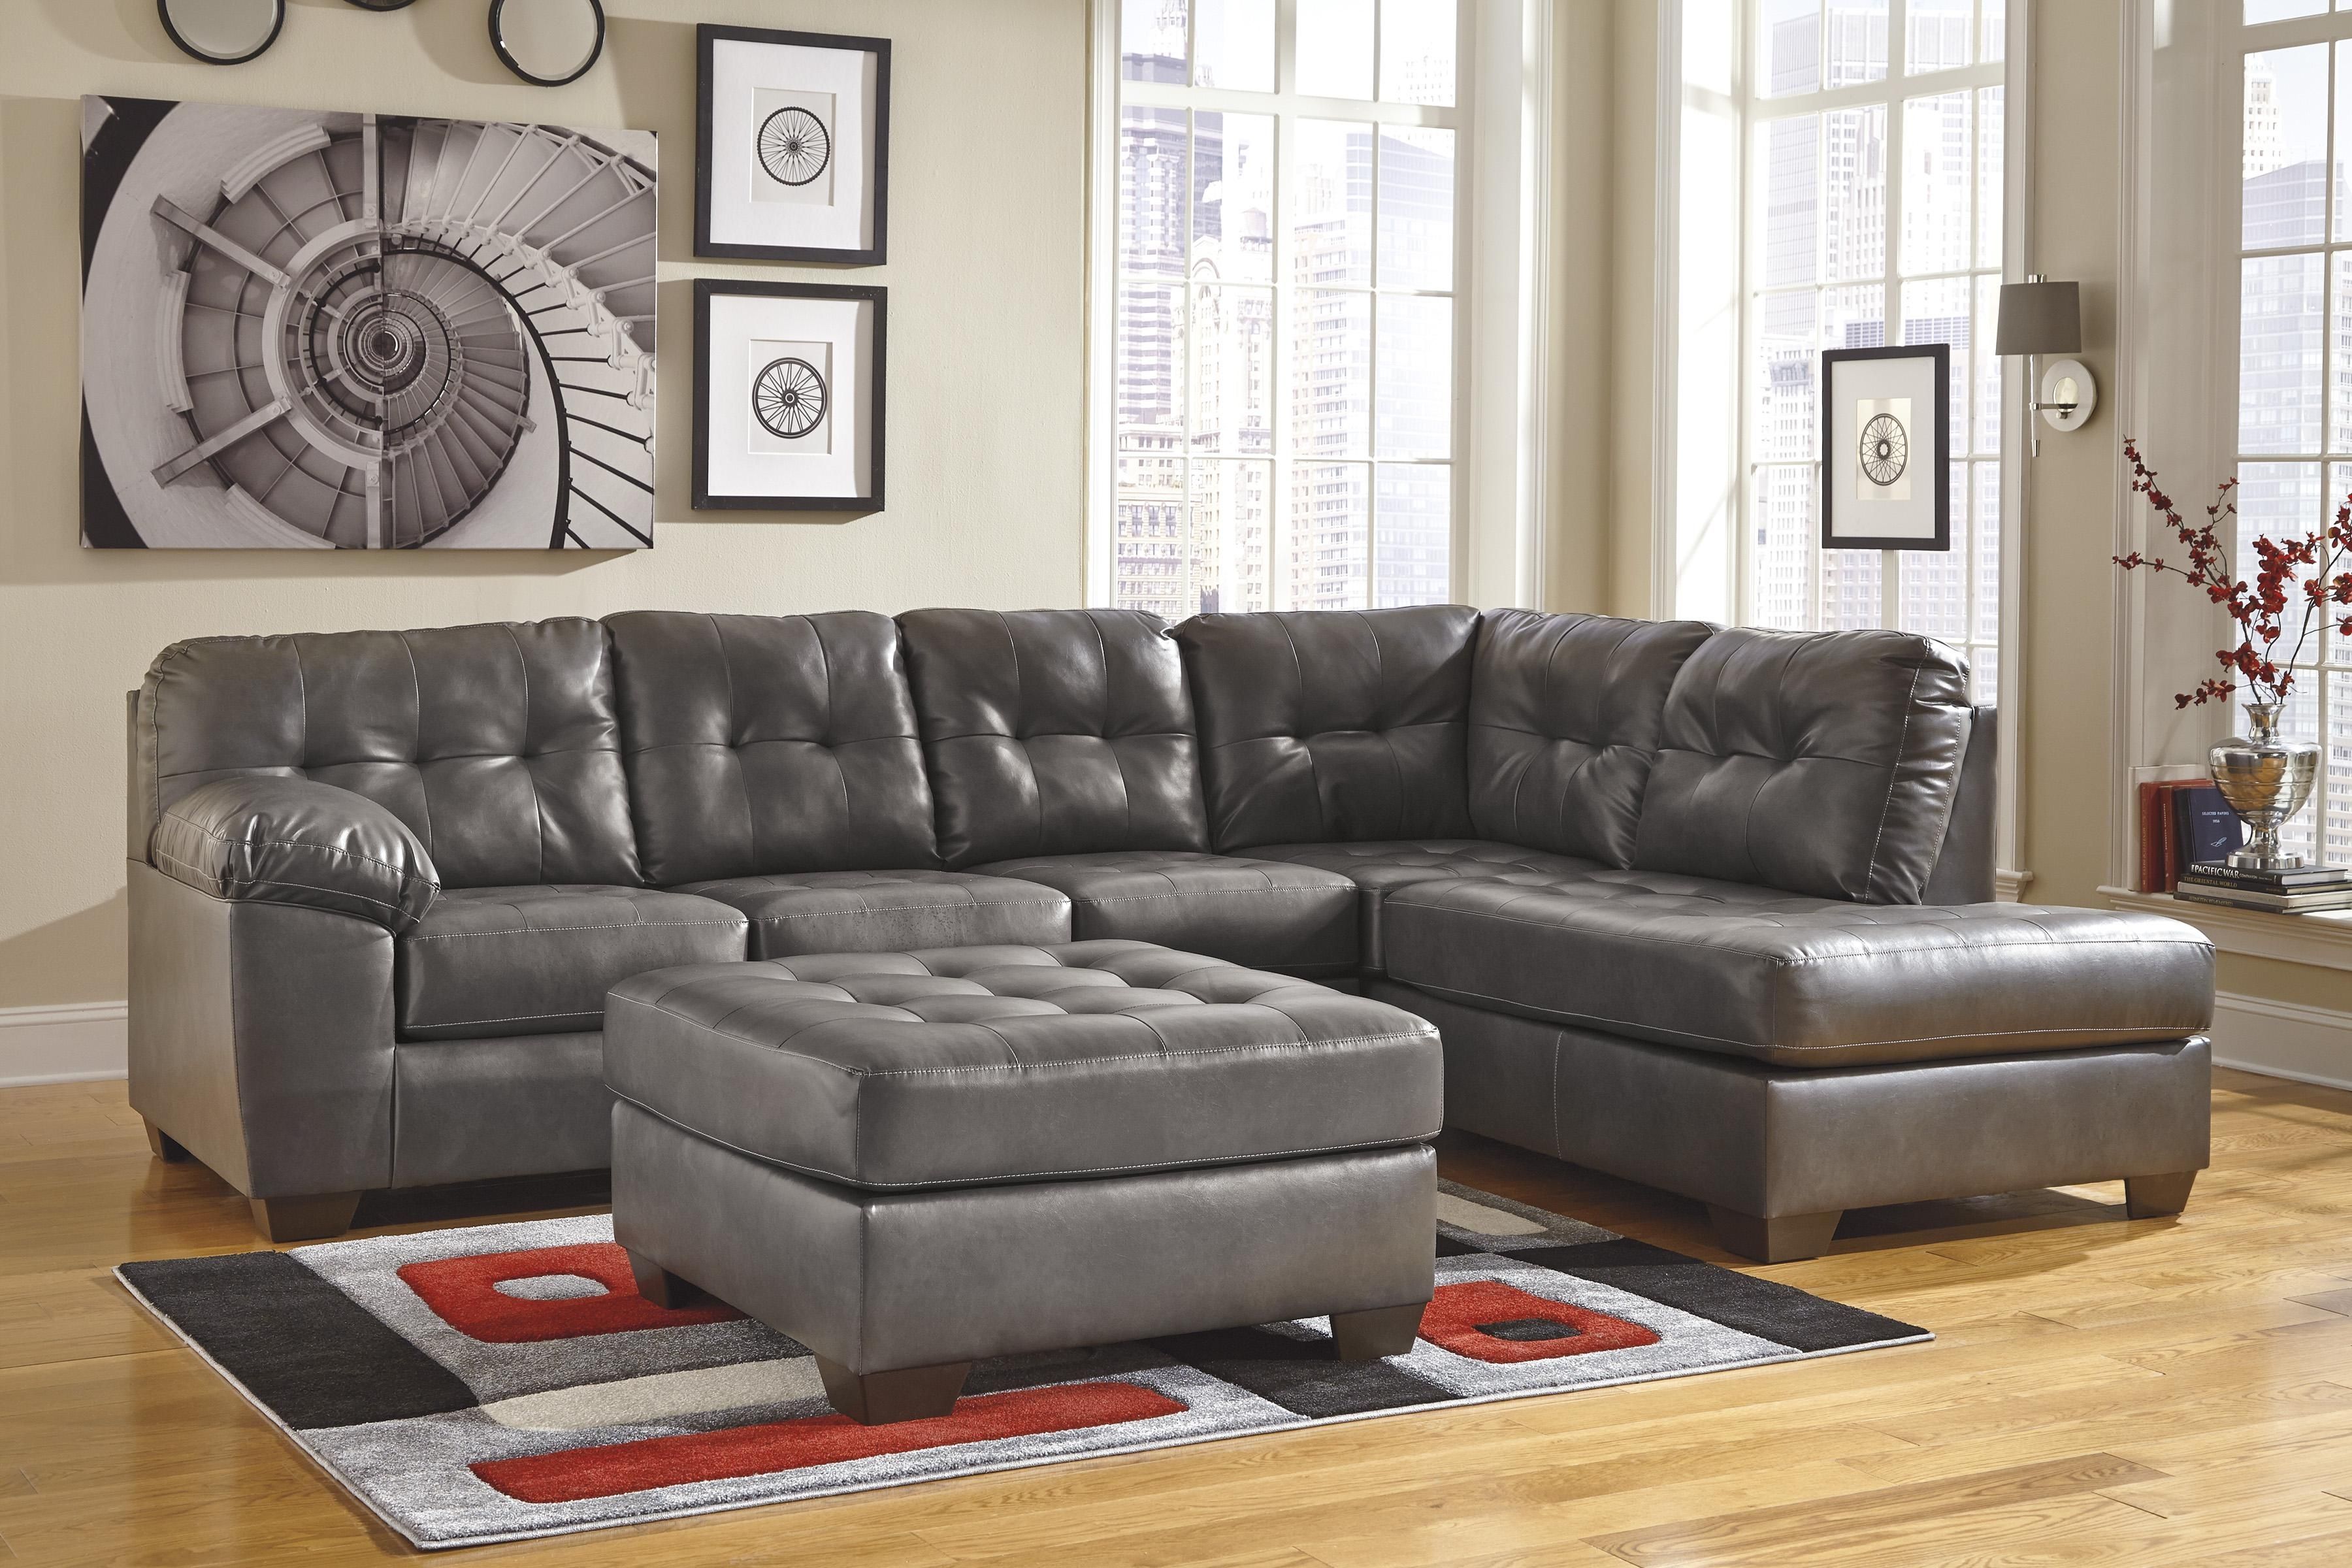 ashley leather sectional sleeper sofa